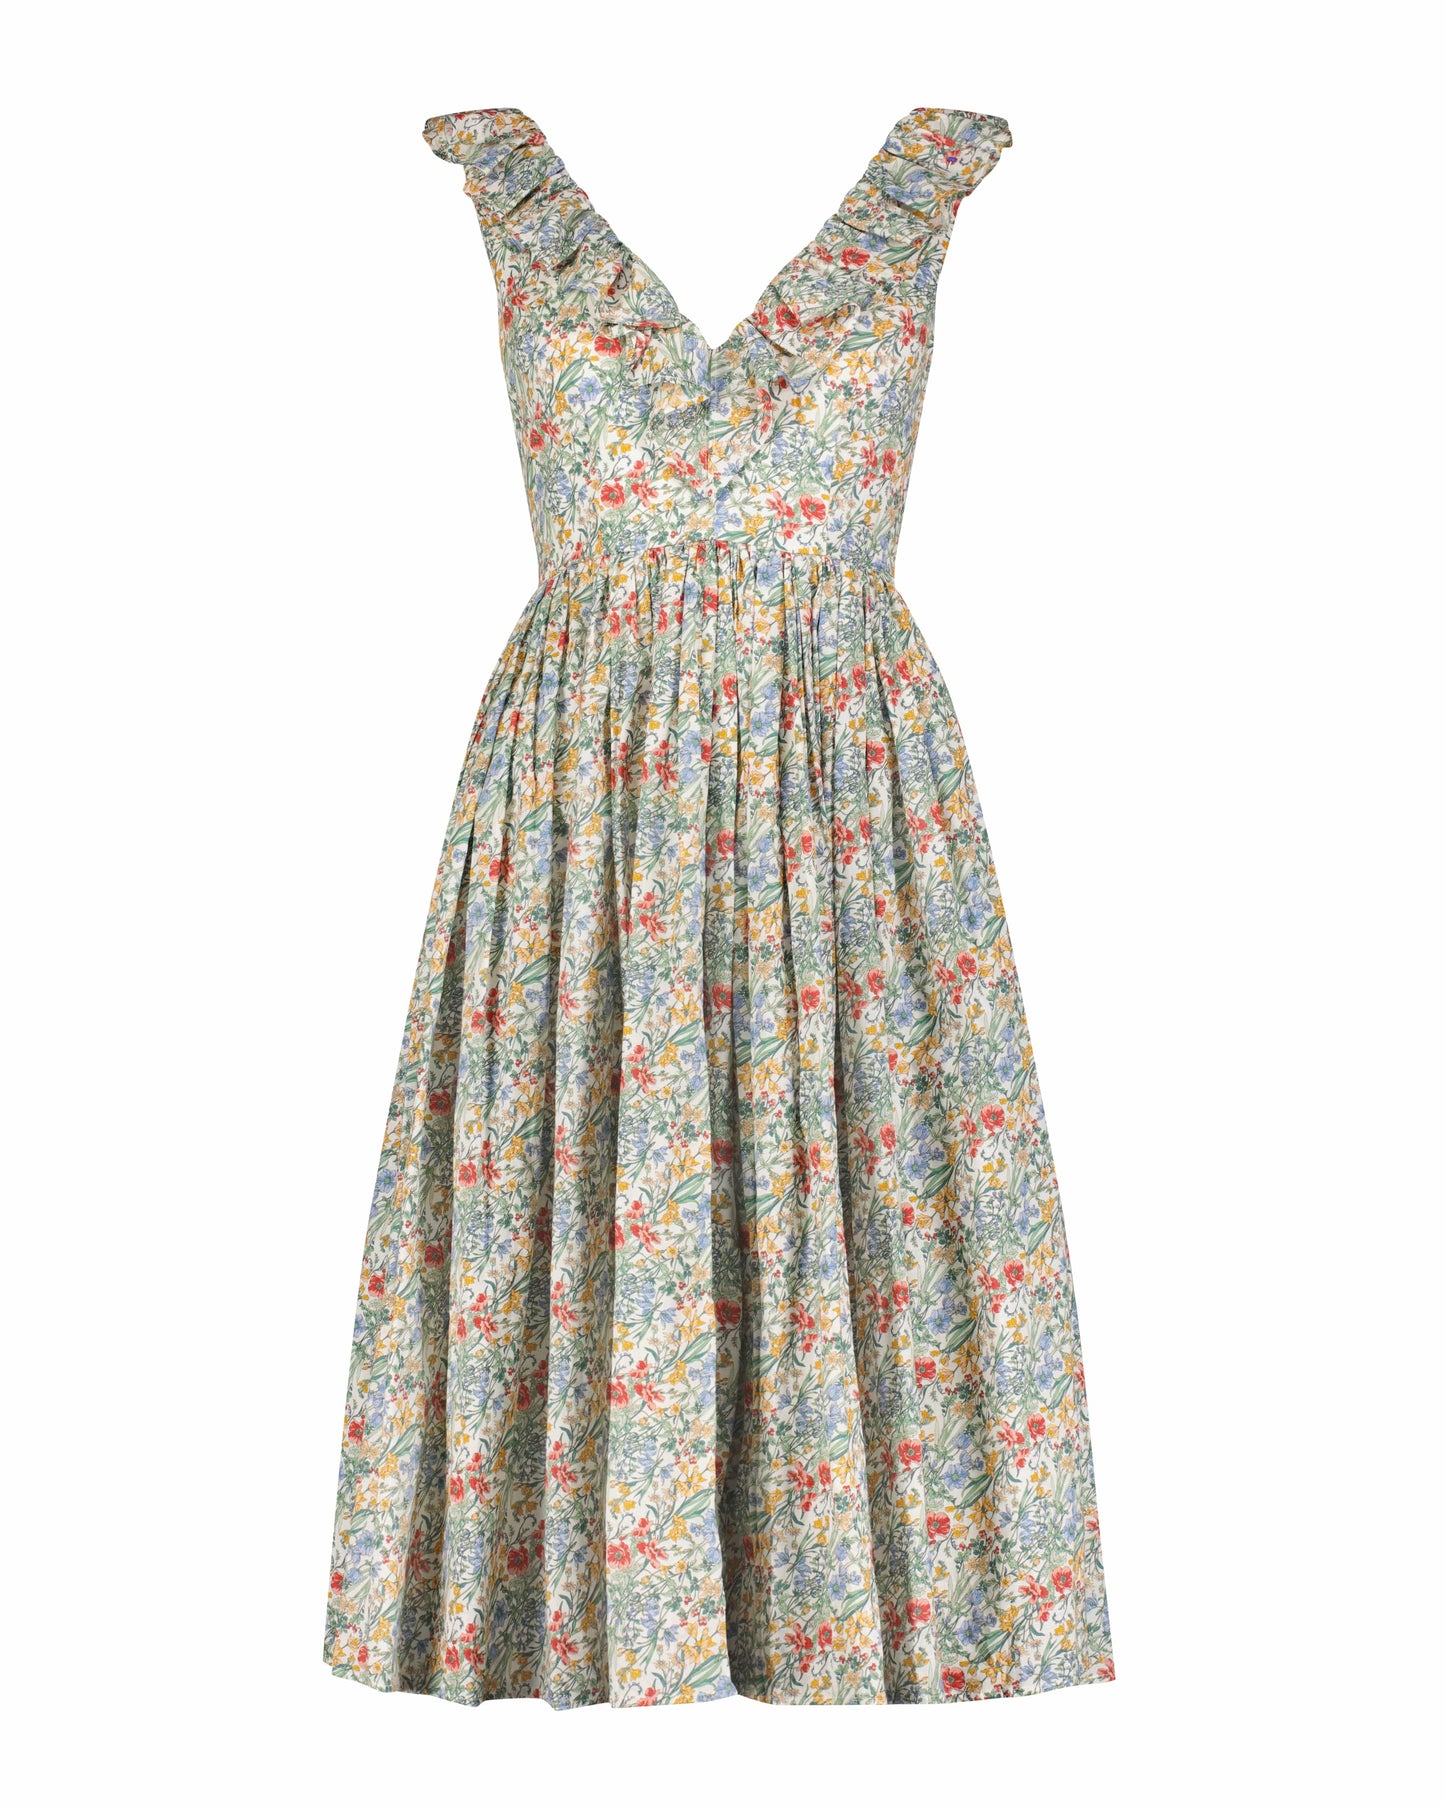 Viola Dress in Summer Cotton Dresses CHRISTINE ALCALAY   